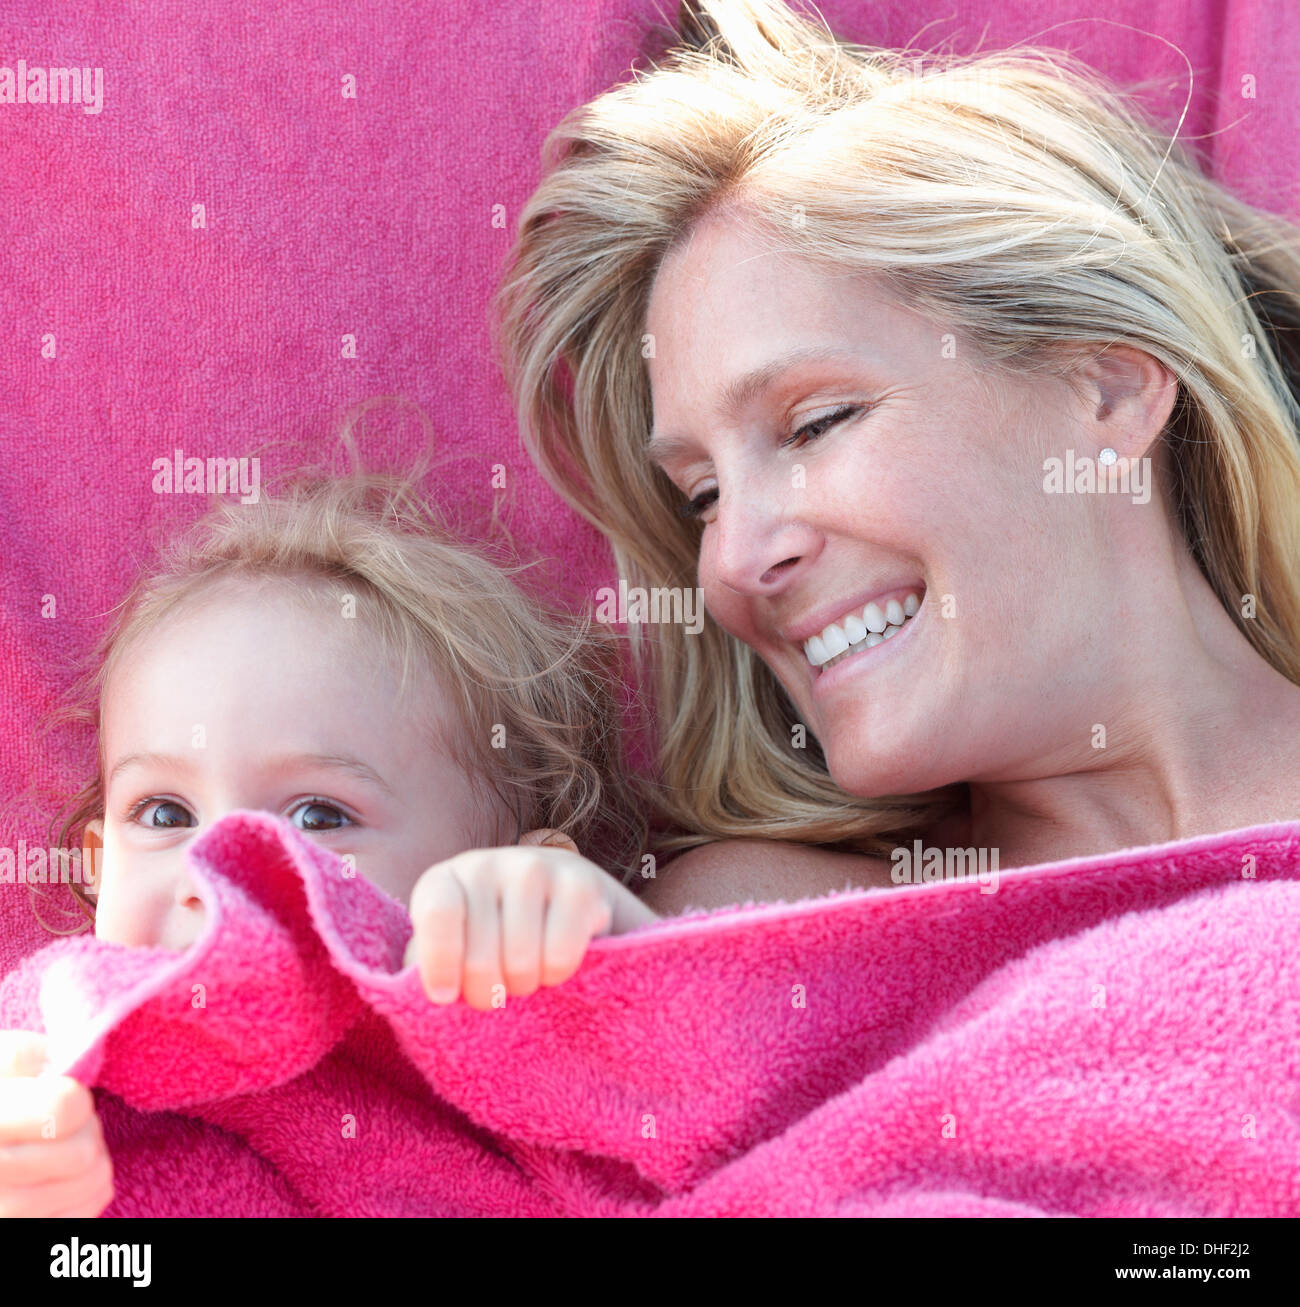 Retrato de madre e hija envuelta en una toalla rosa Foto de stock